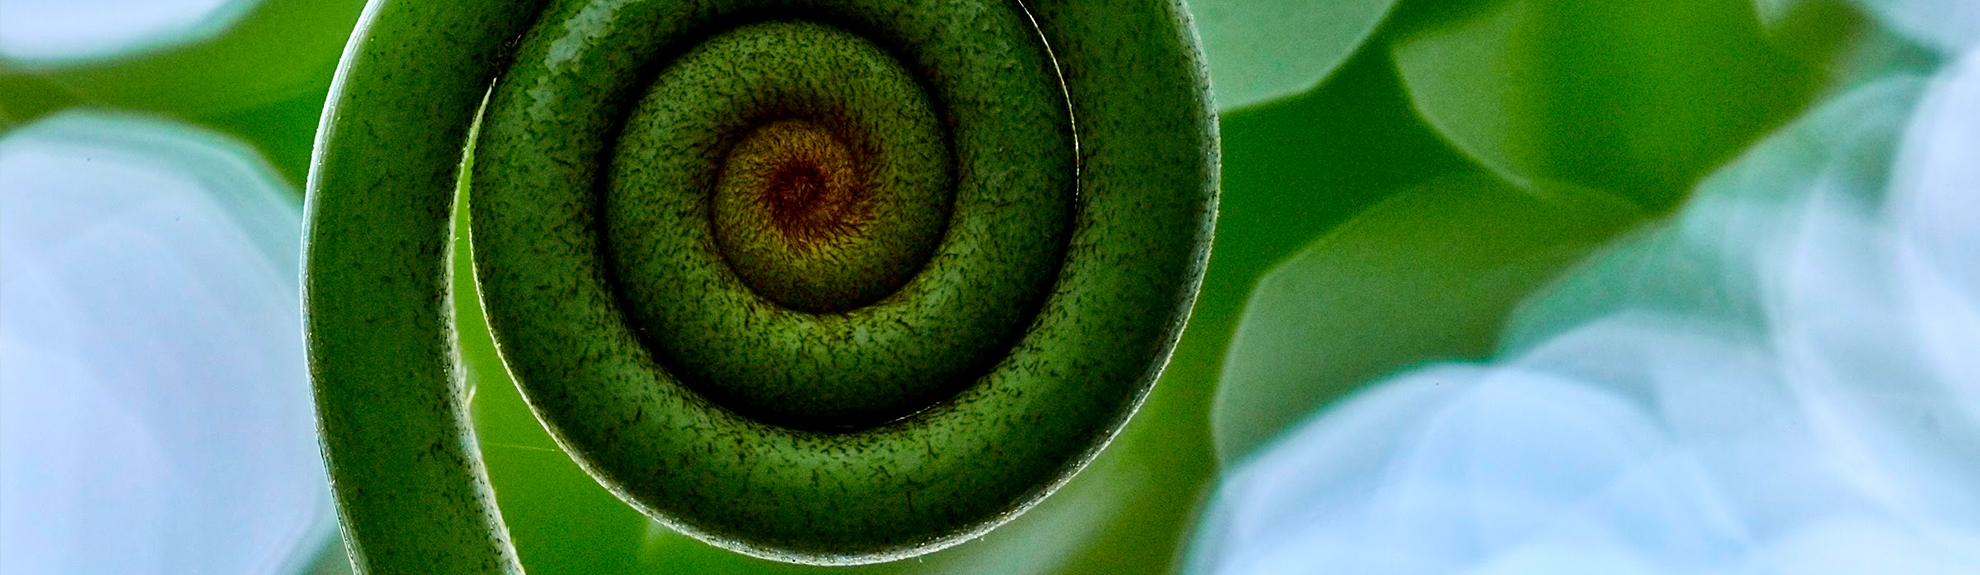 Extreme macro close up of fiddlehead fern